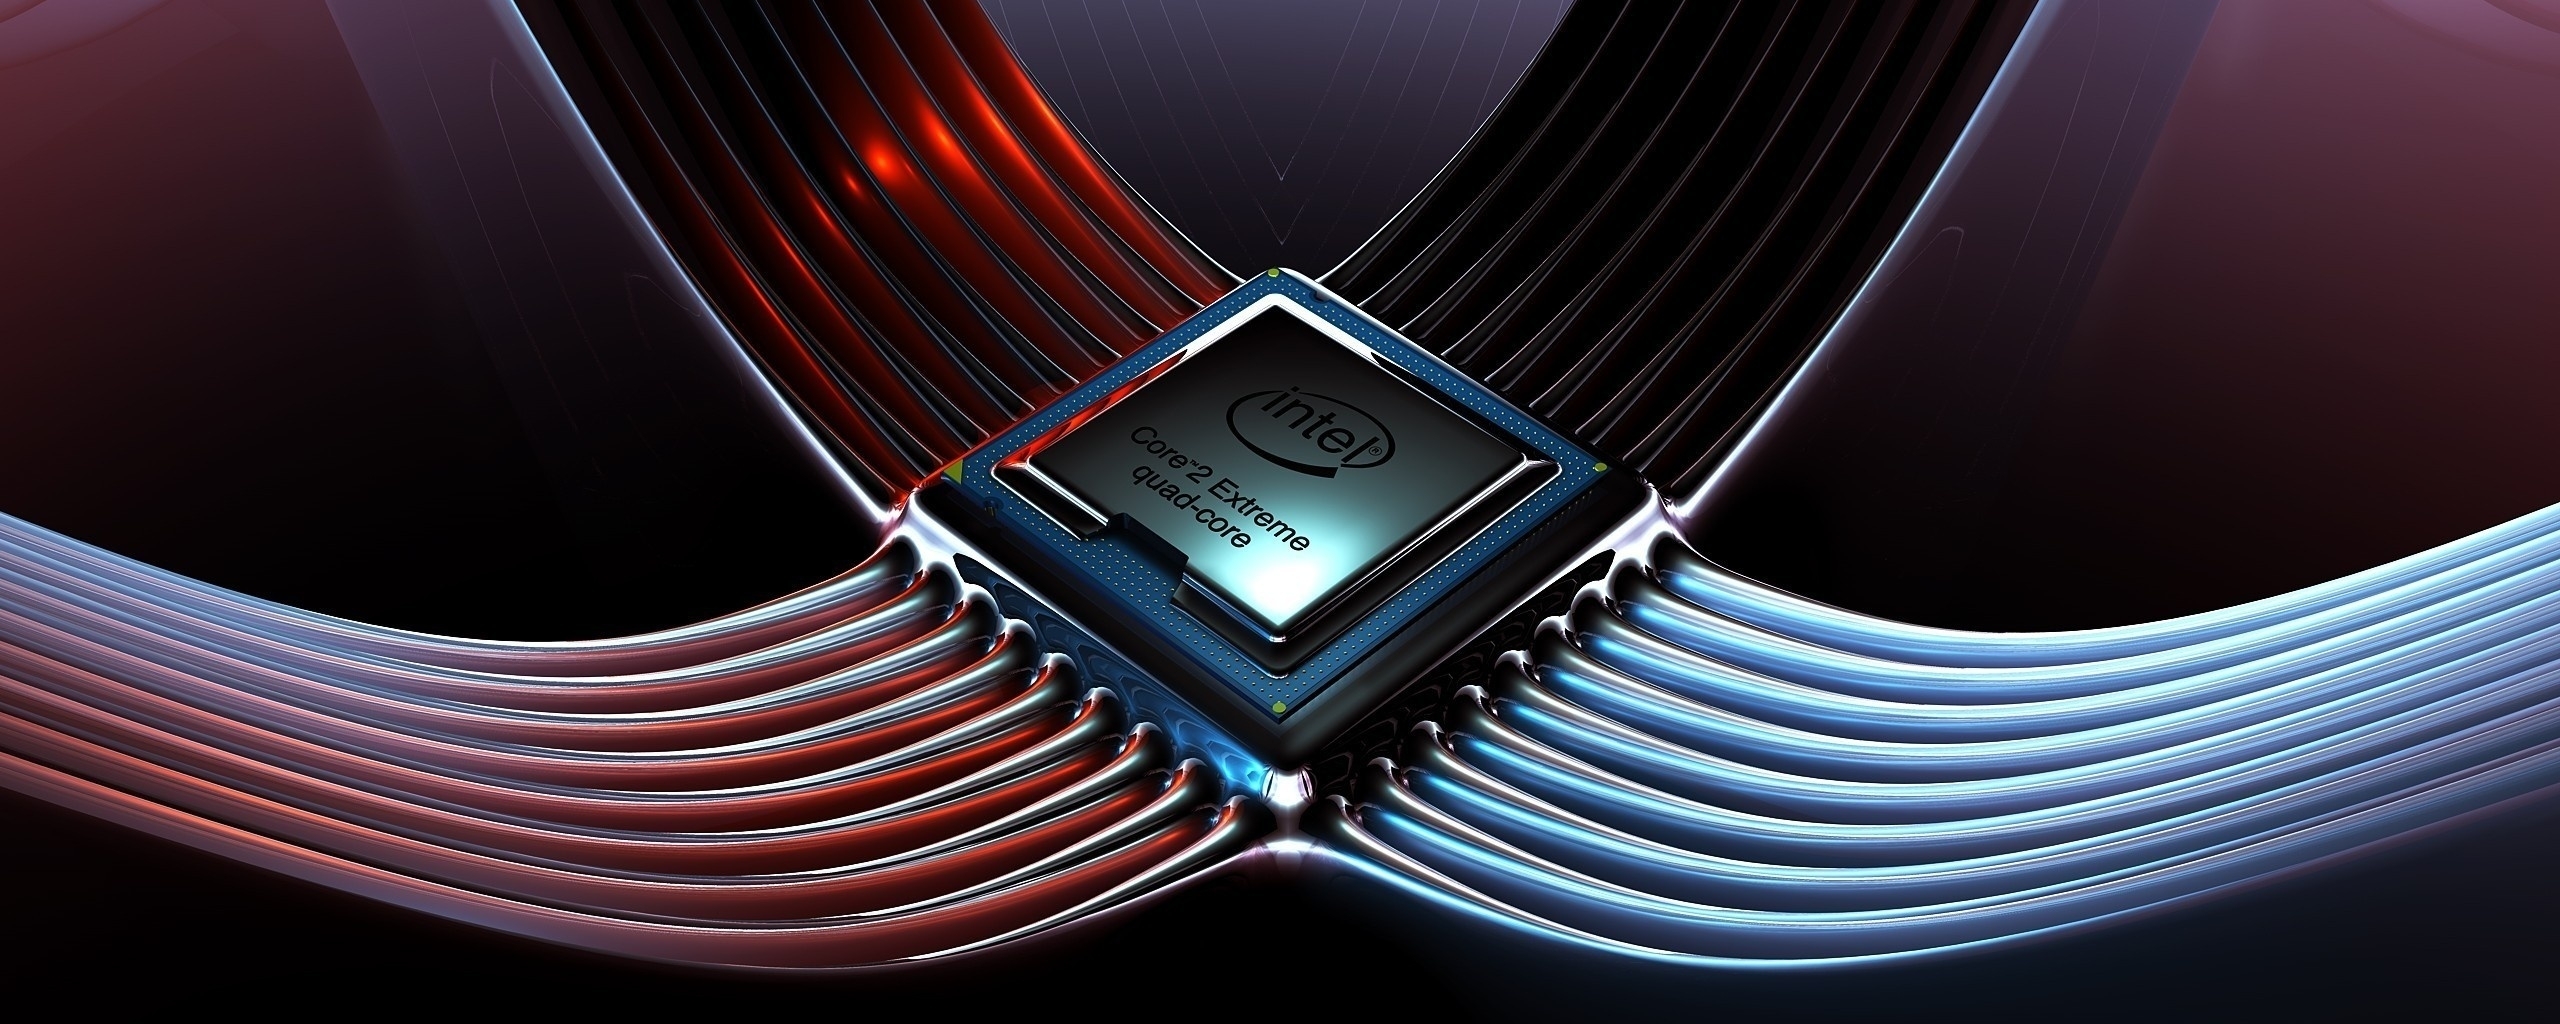 Процессор Intel Core 2 Extreme quad-core без смс